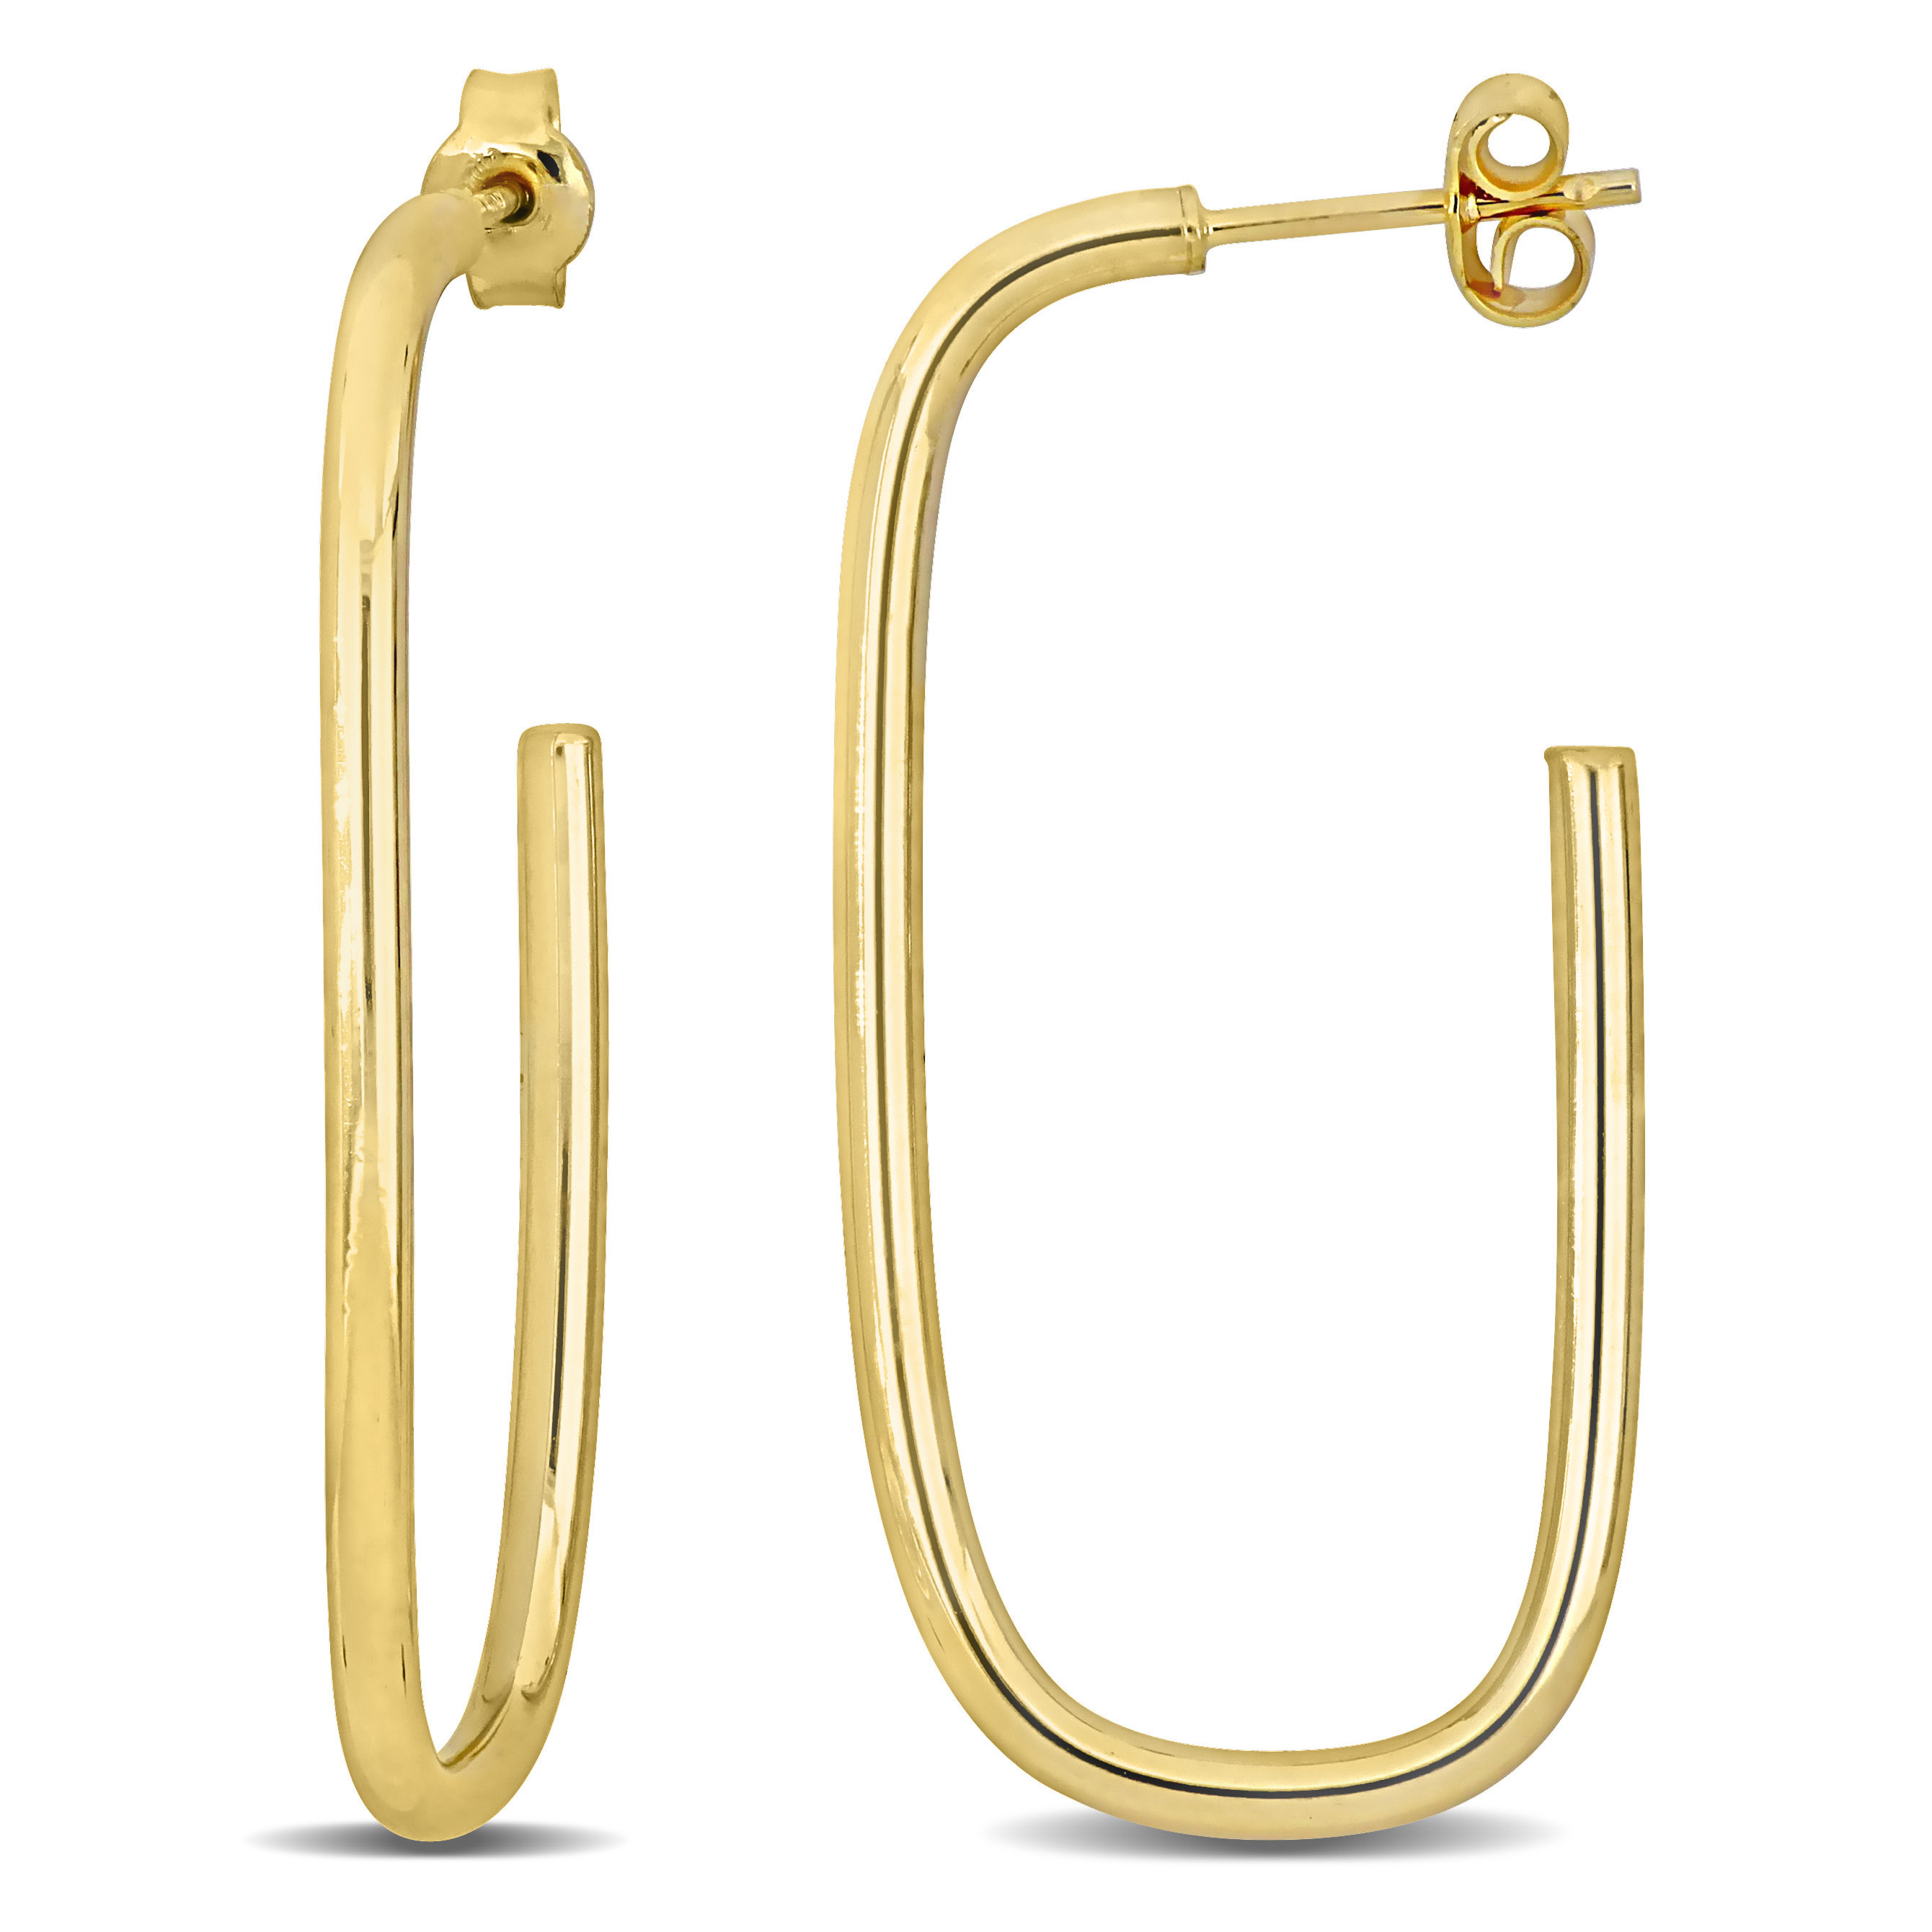 Open Re CTangular Earrings in 10k Yellow Gold